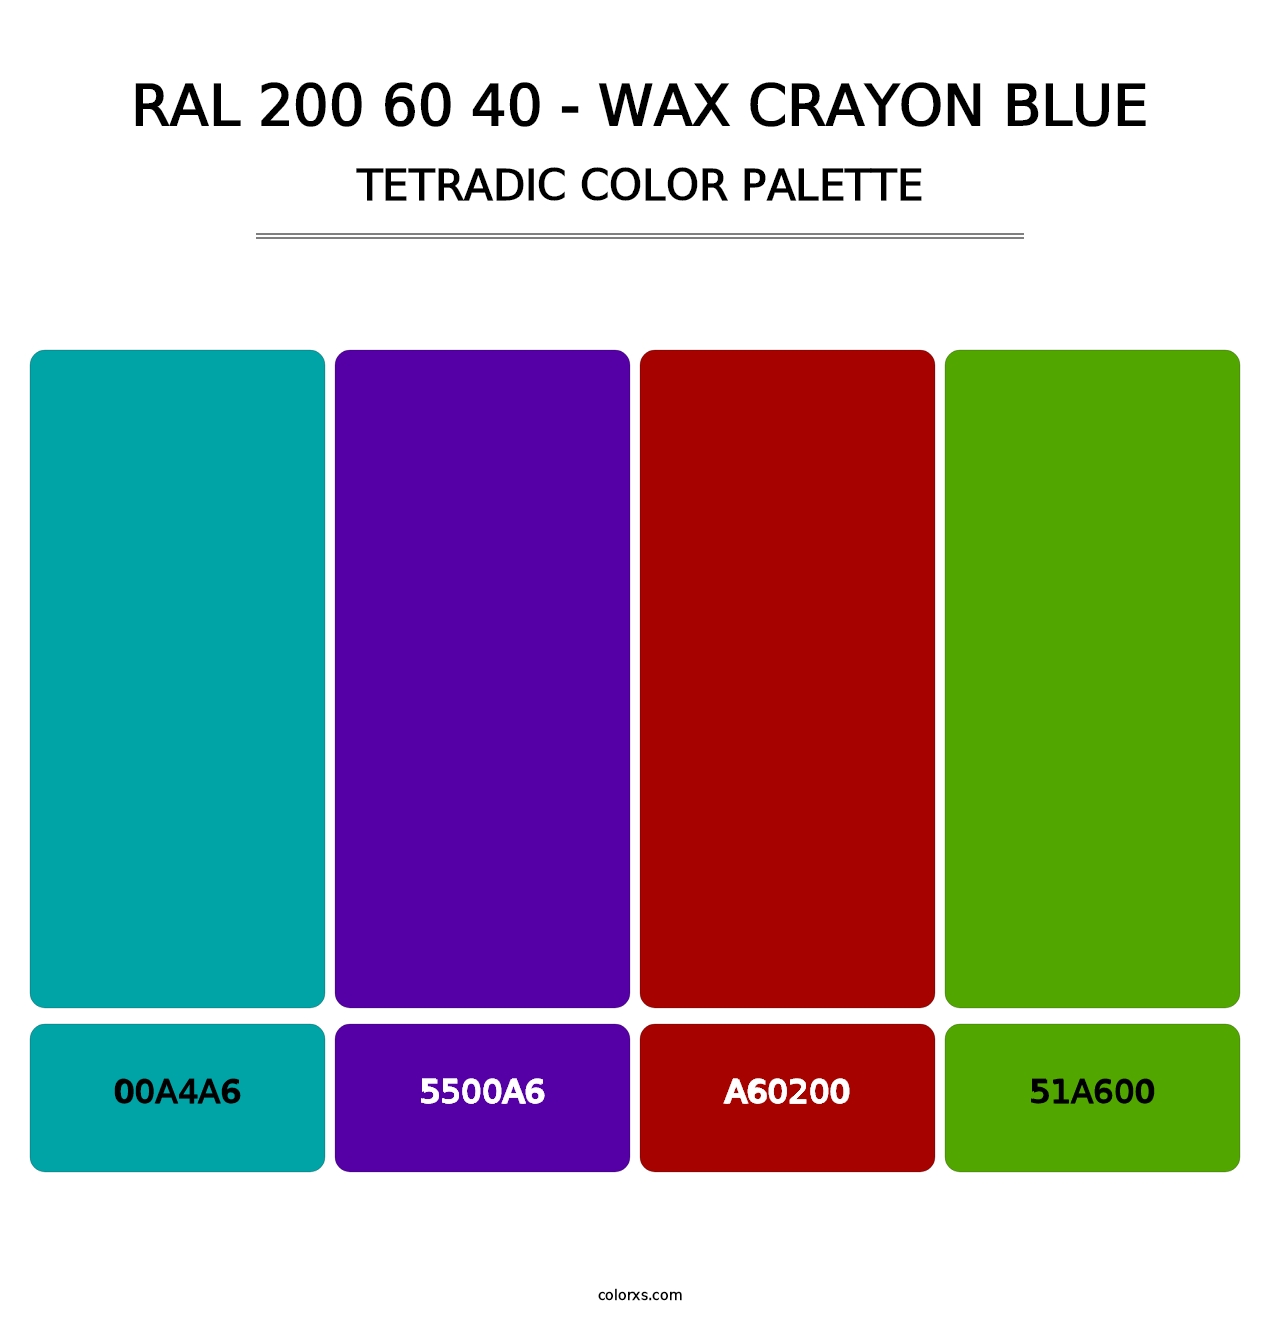 RAL 200 60 40 - Wax Crayon Blue - Tetradic Color Palette